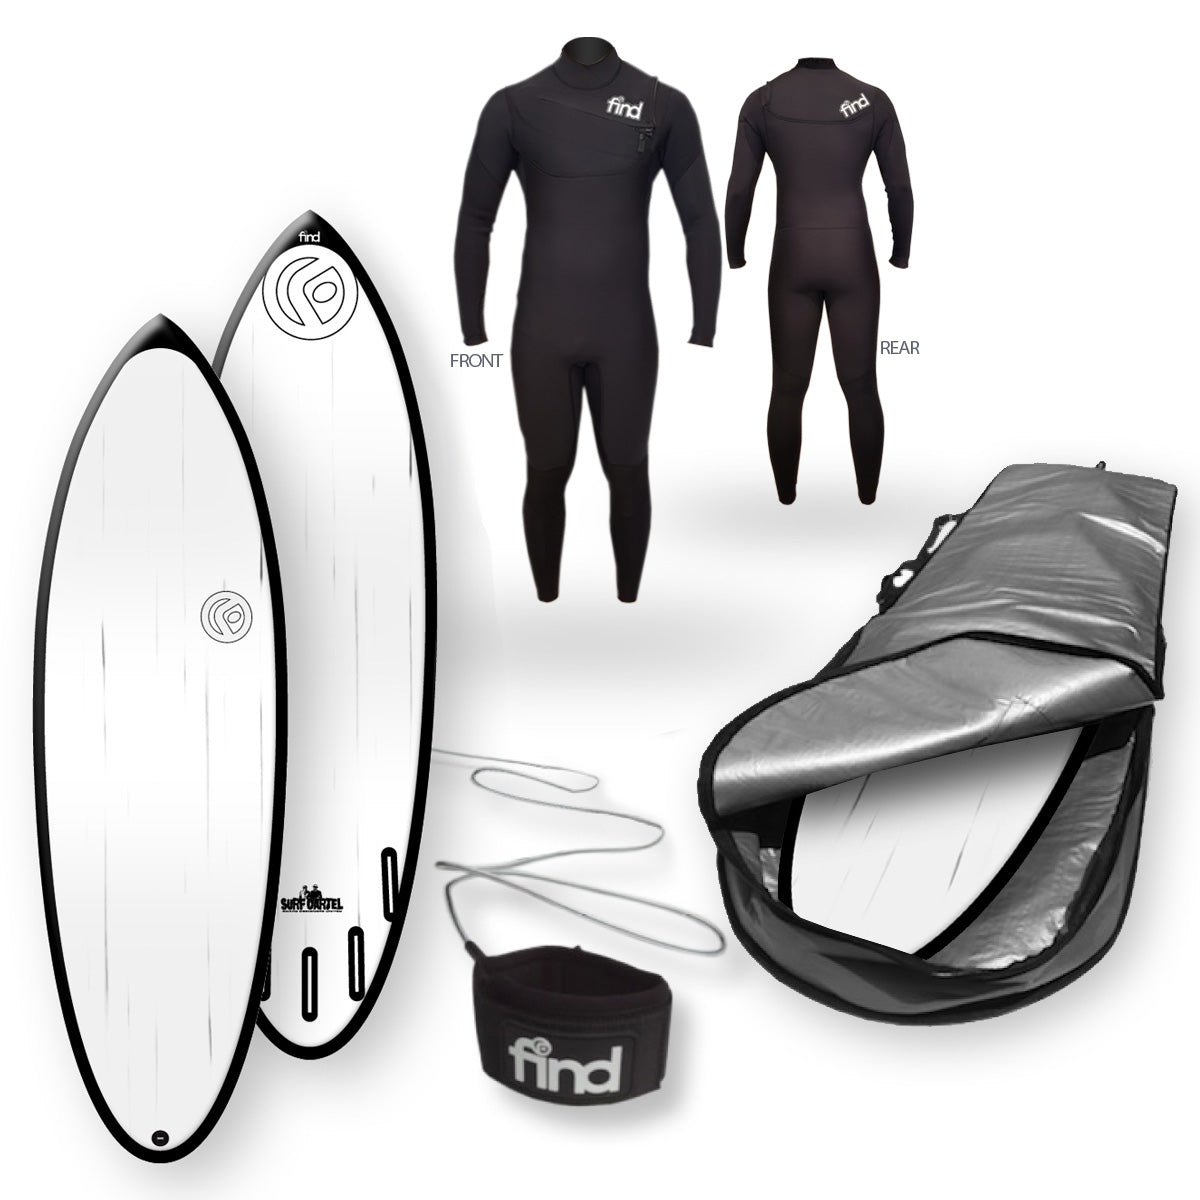 Find™ 57 Blitz Polytec Black Streaked Surfboard Fins Cover Leash Wetsuit Package - Default Title